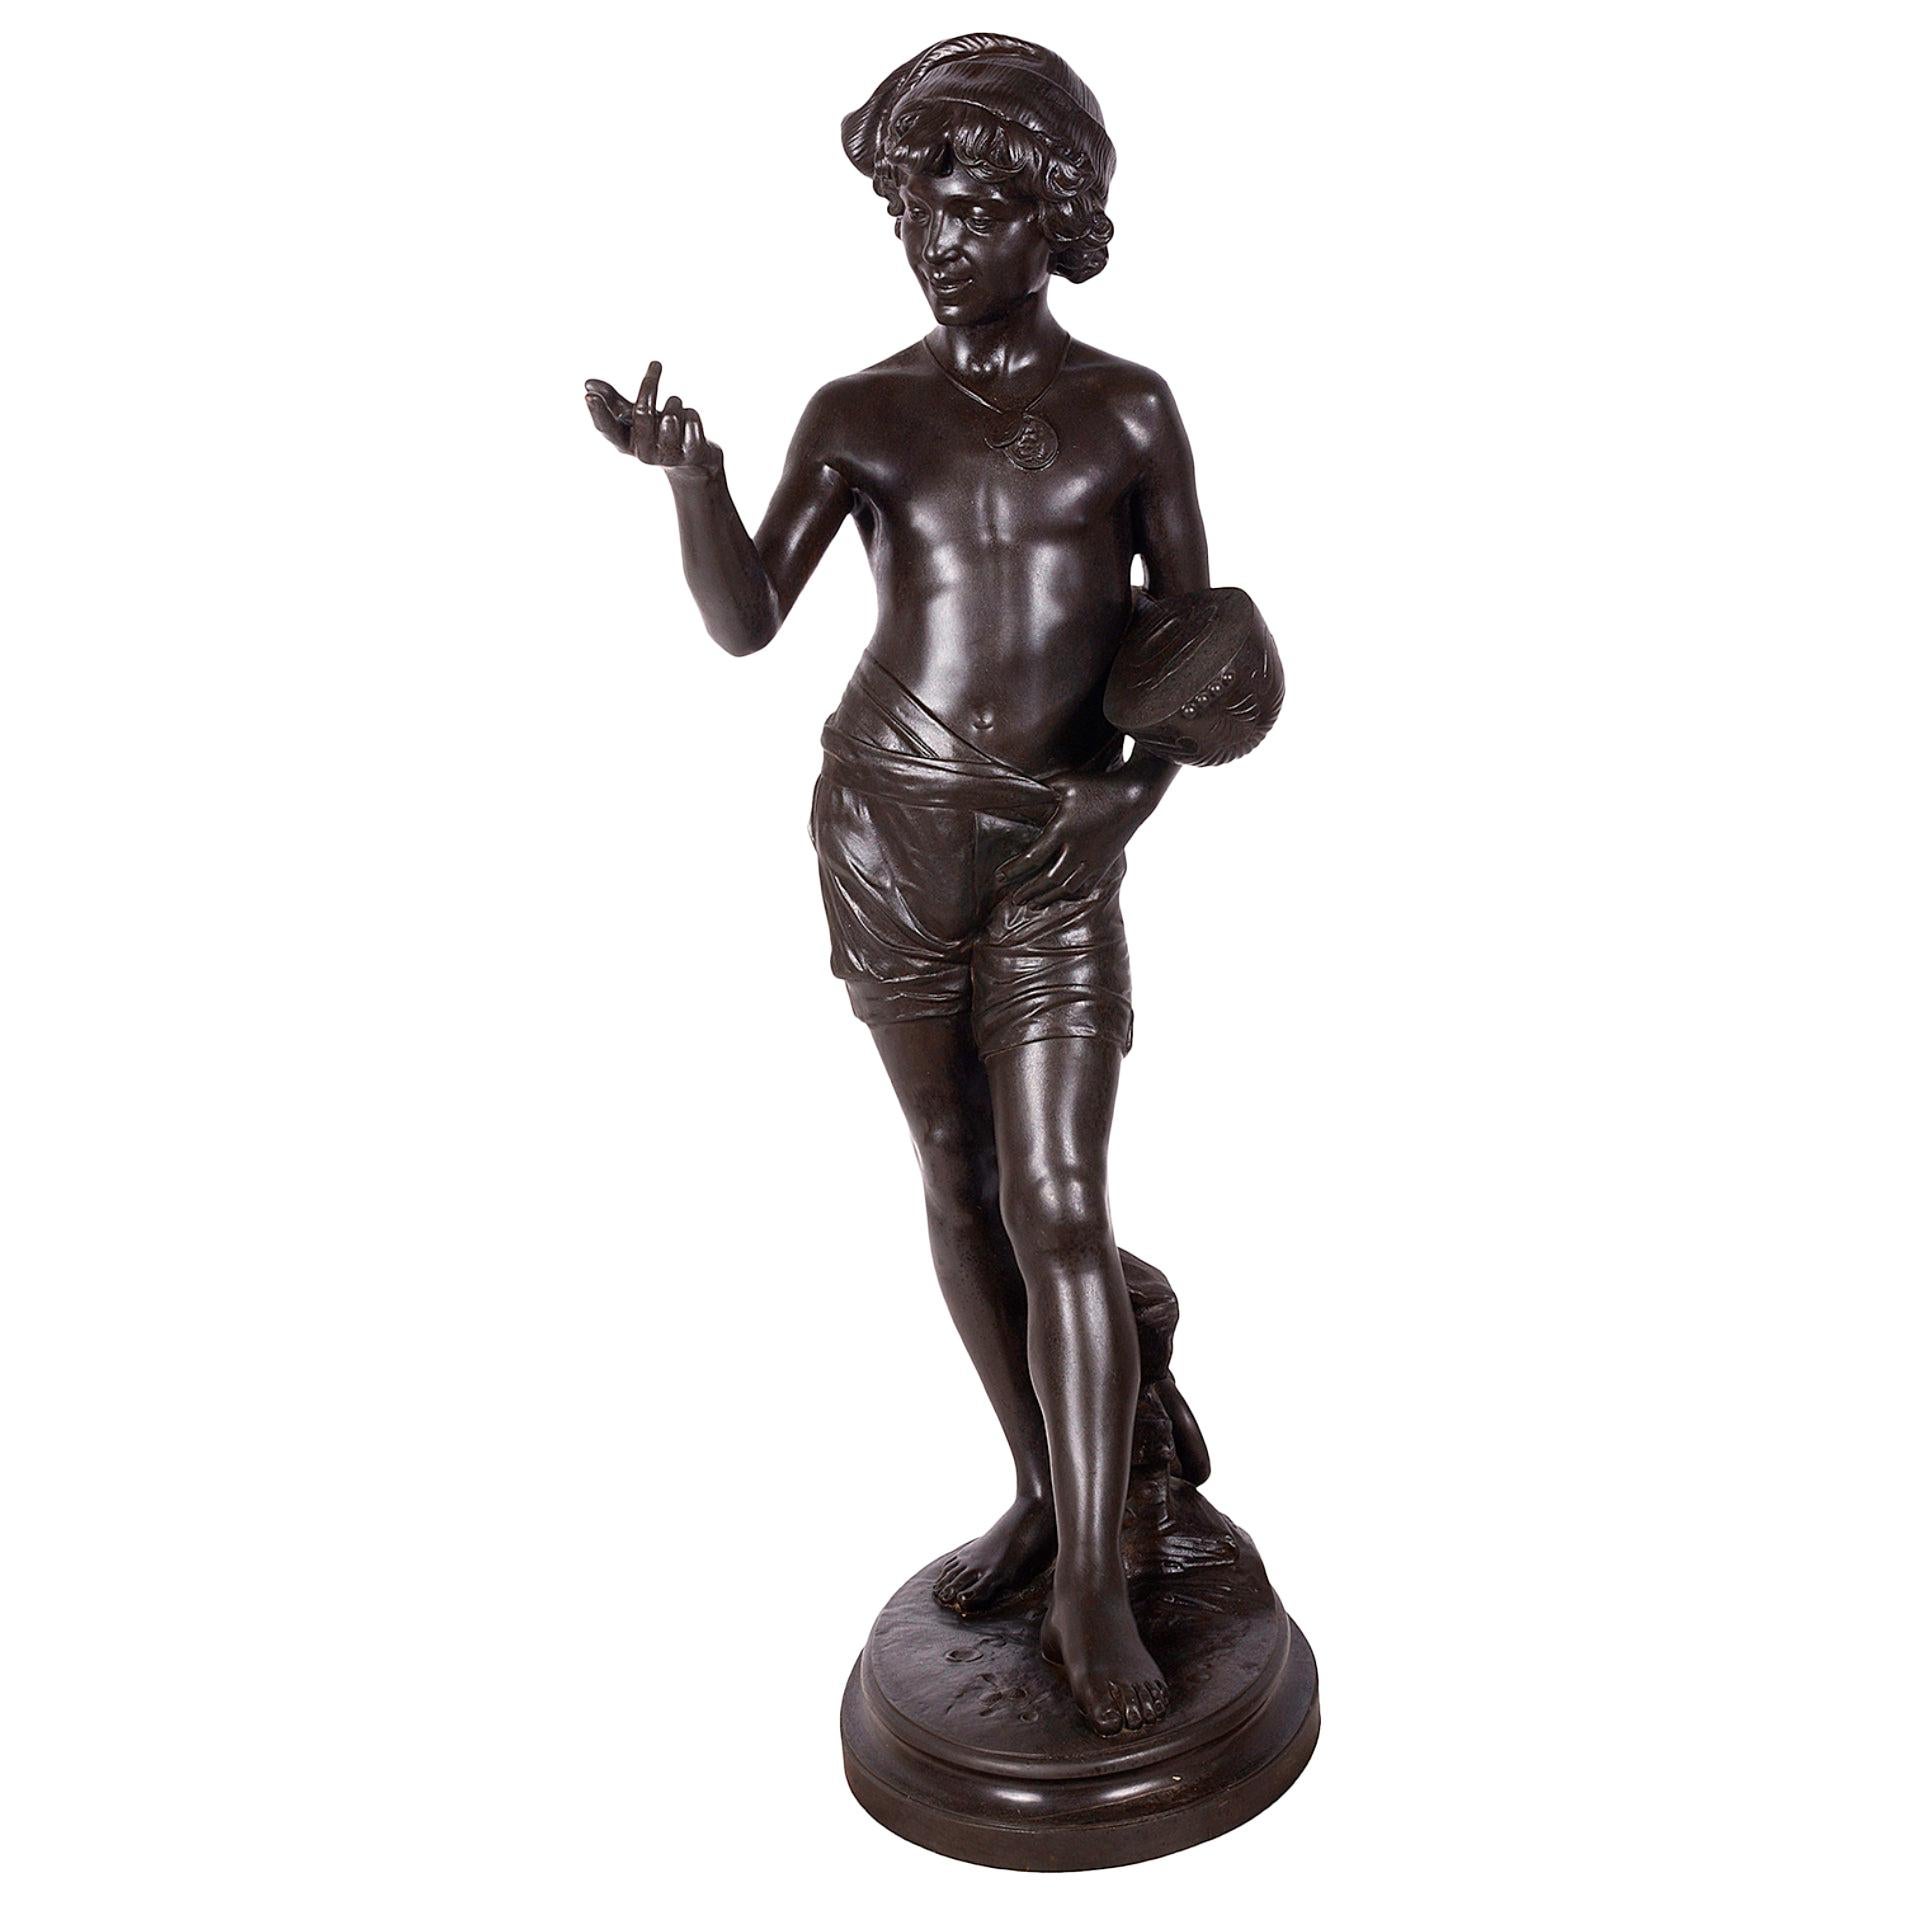 Statue classique en bronze d'un garçon tenant une mandarine, vers 1880